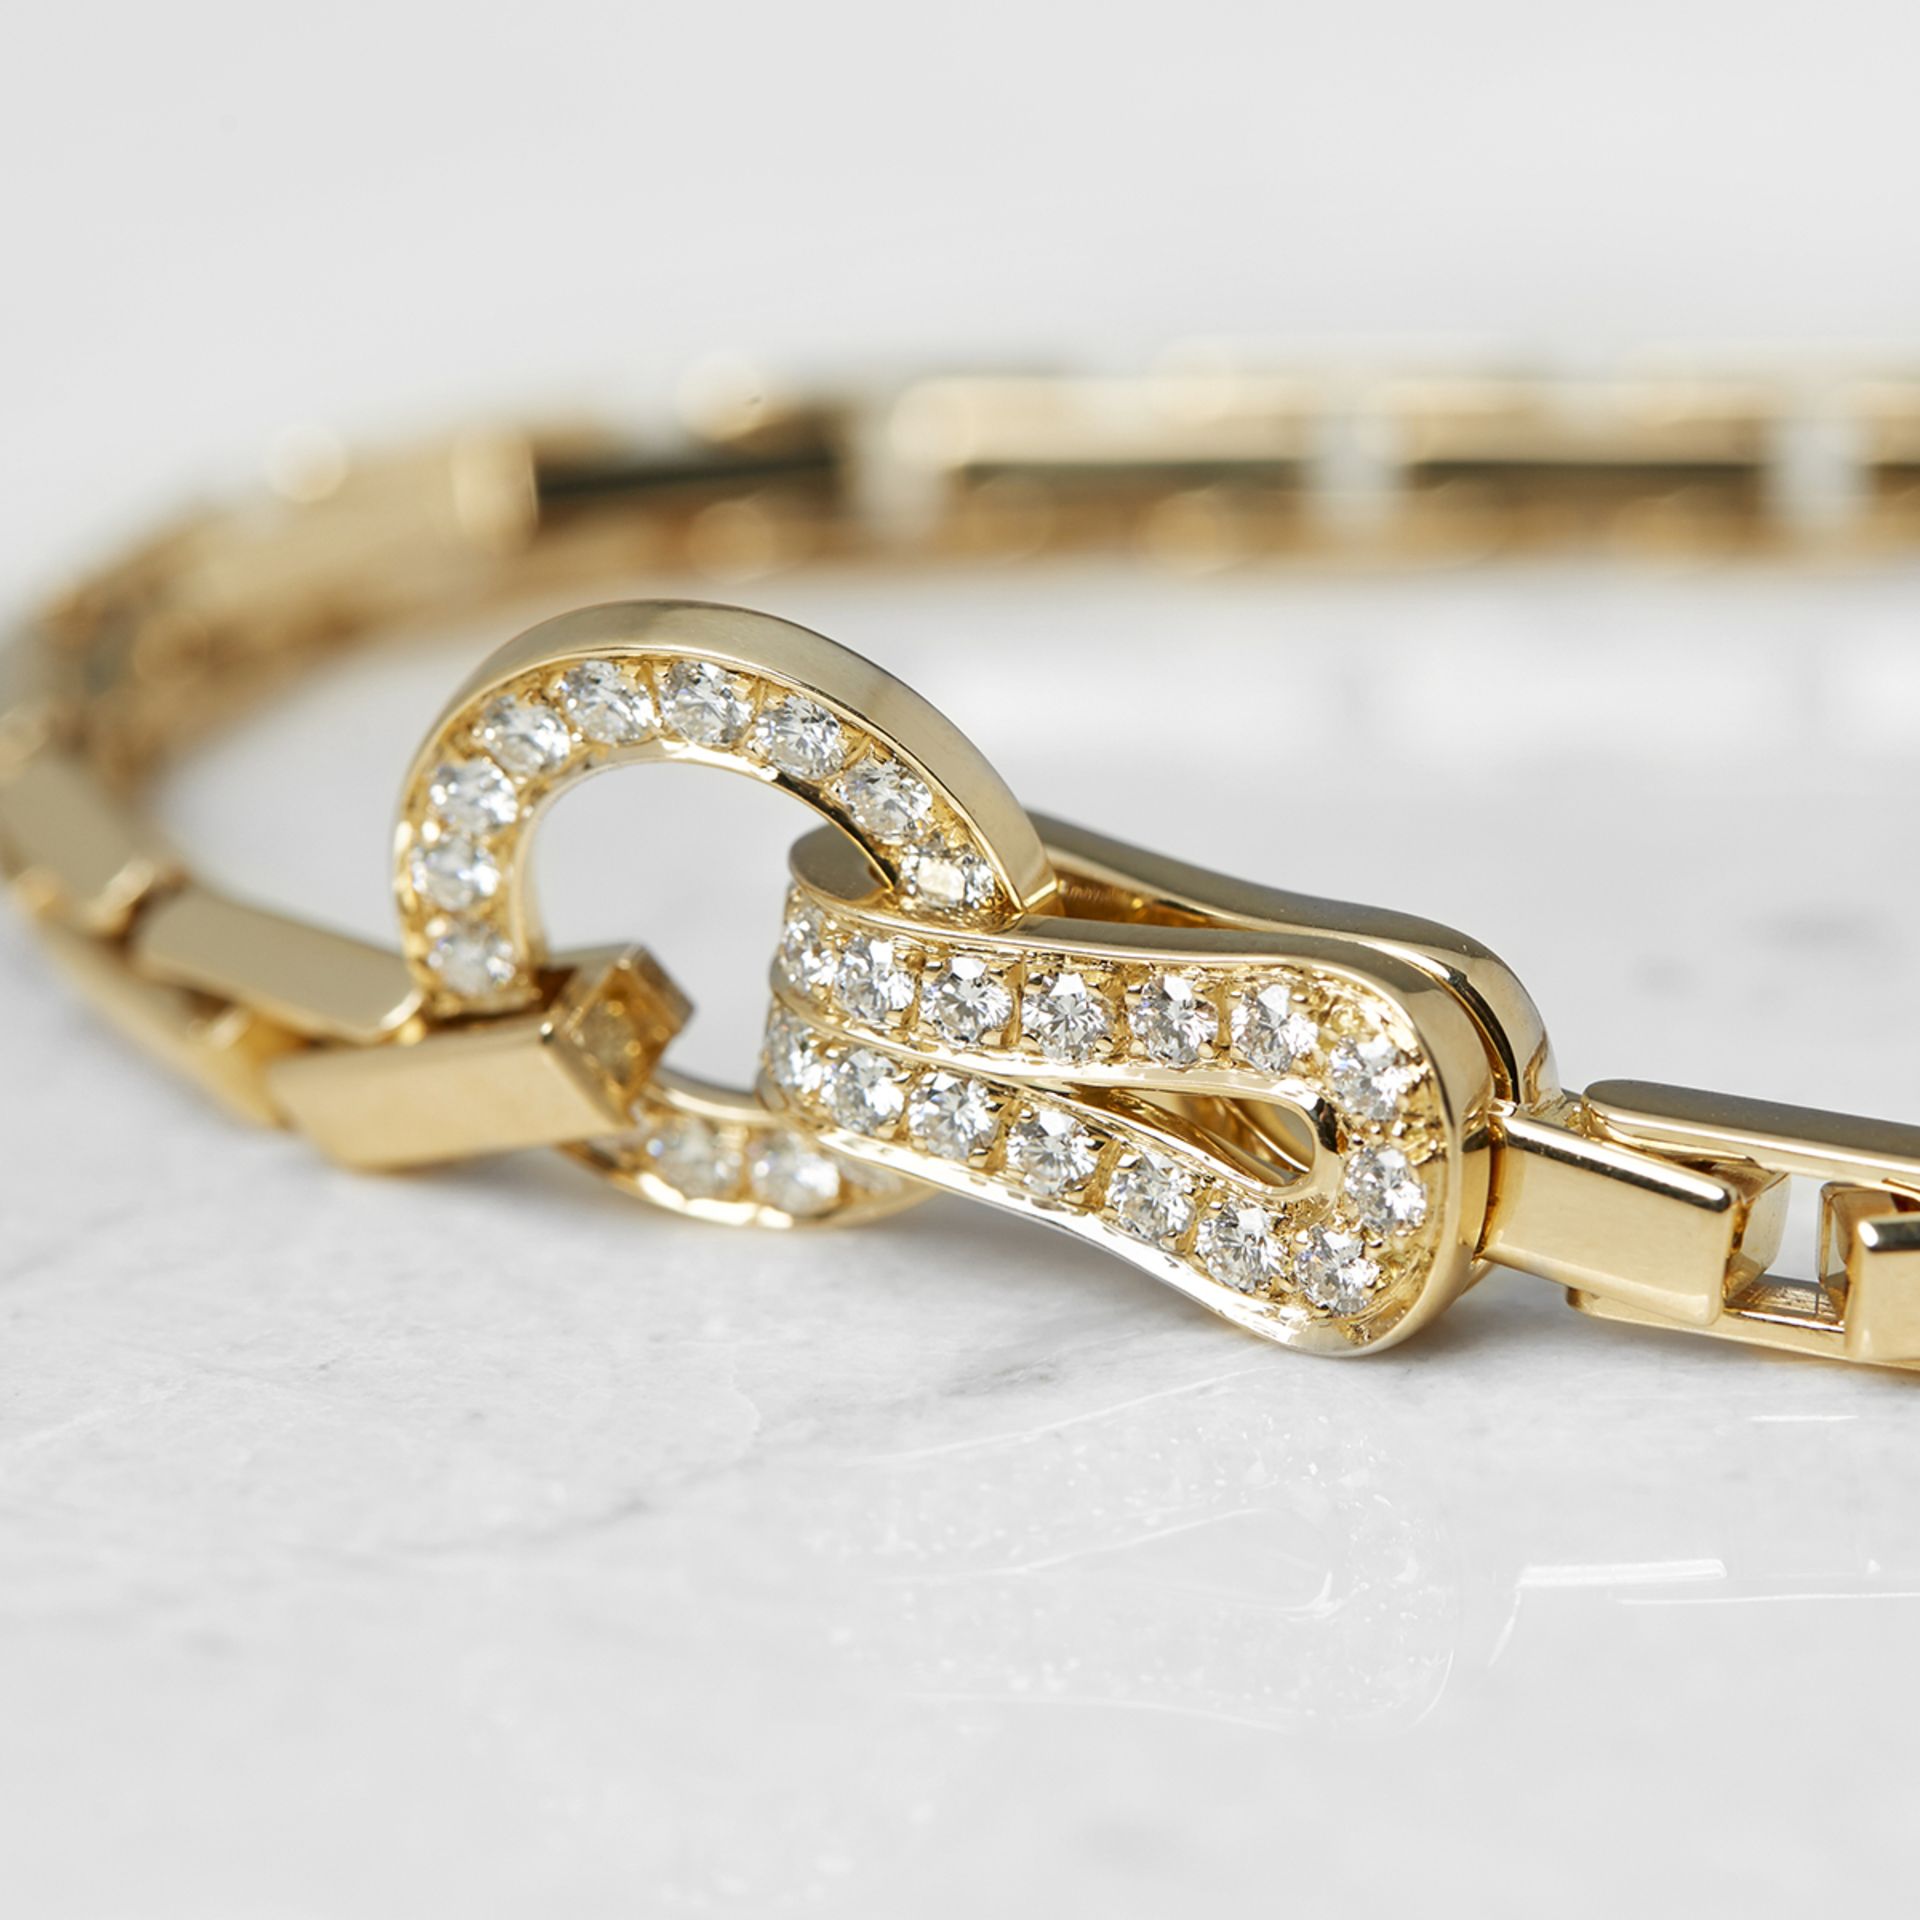 Cartier 18k Yellow Gold Diamond Agrafe Bracelet - Image 4 of 7